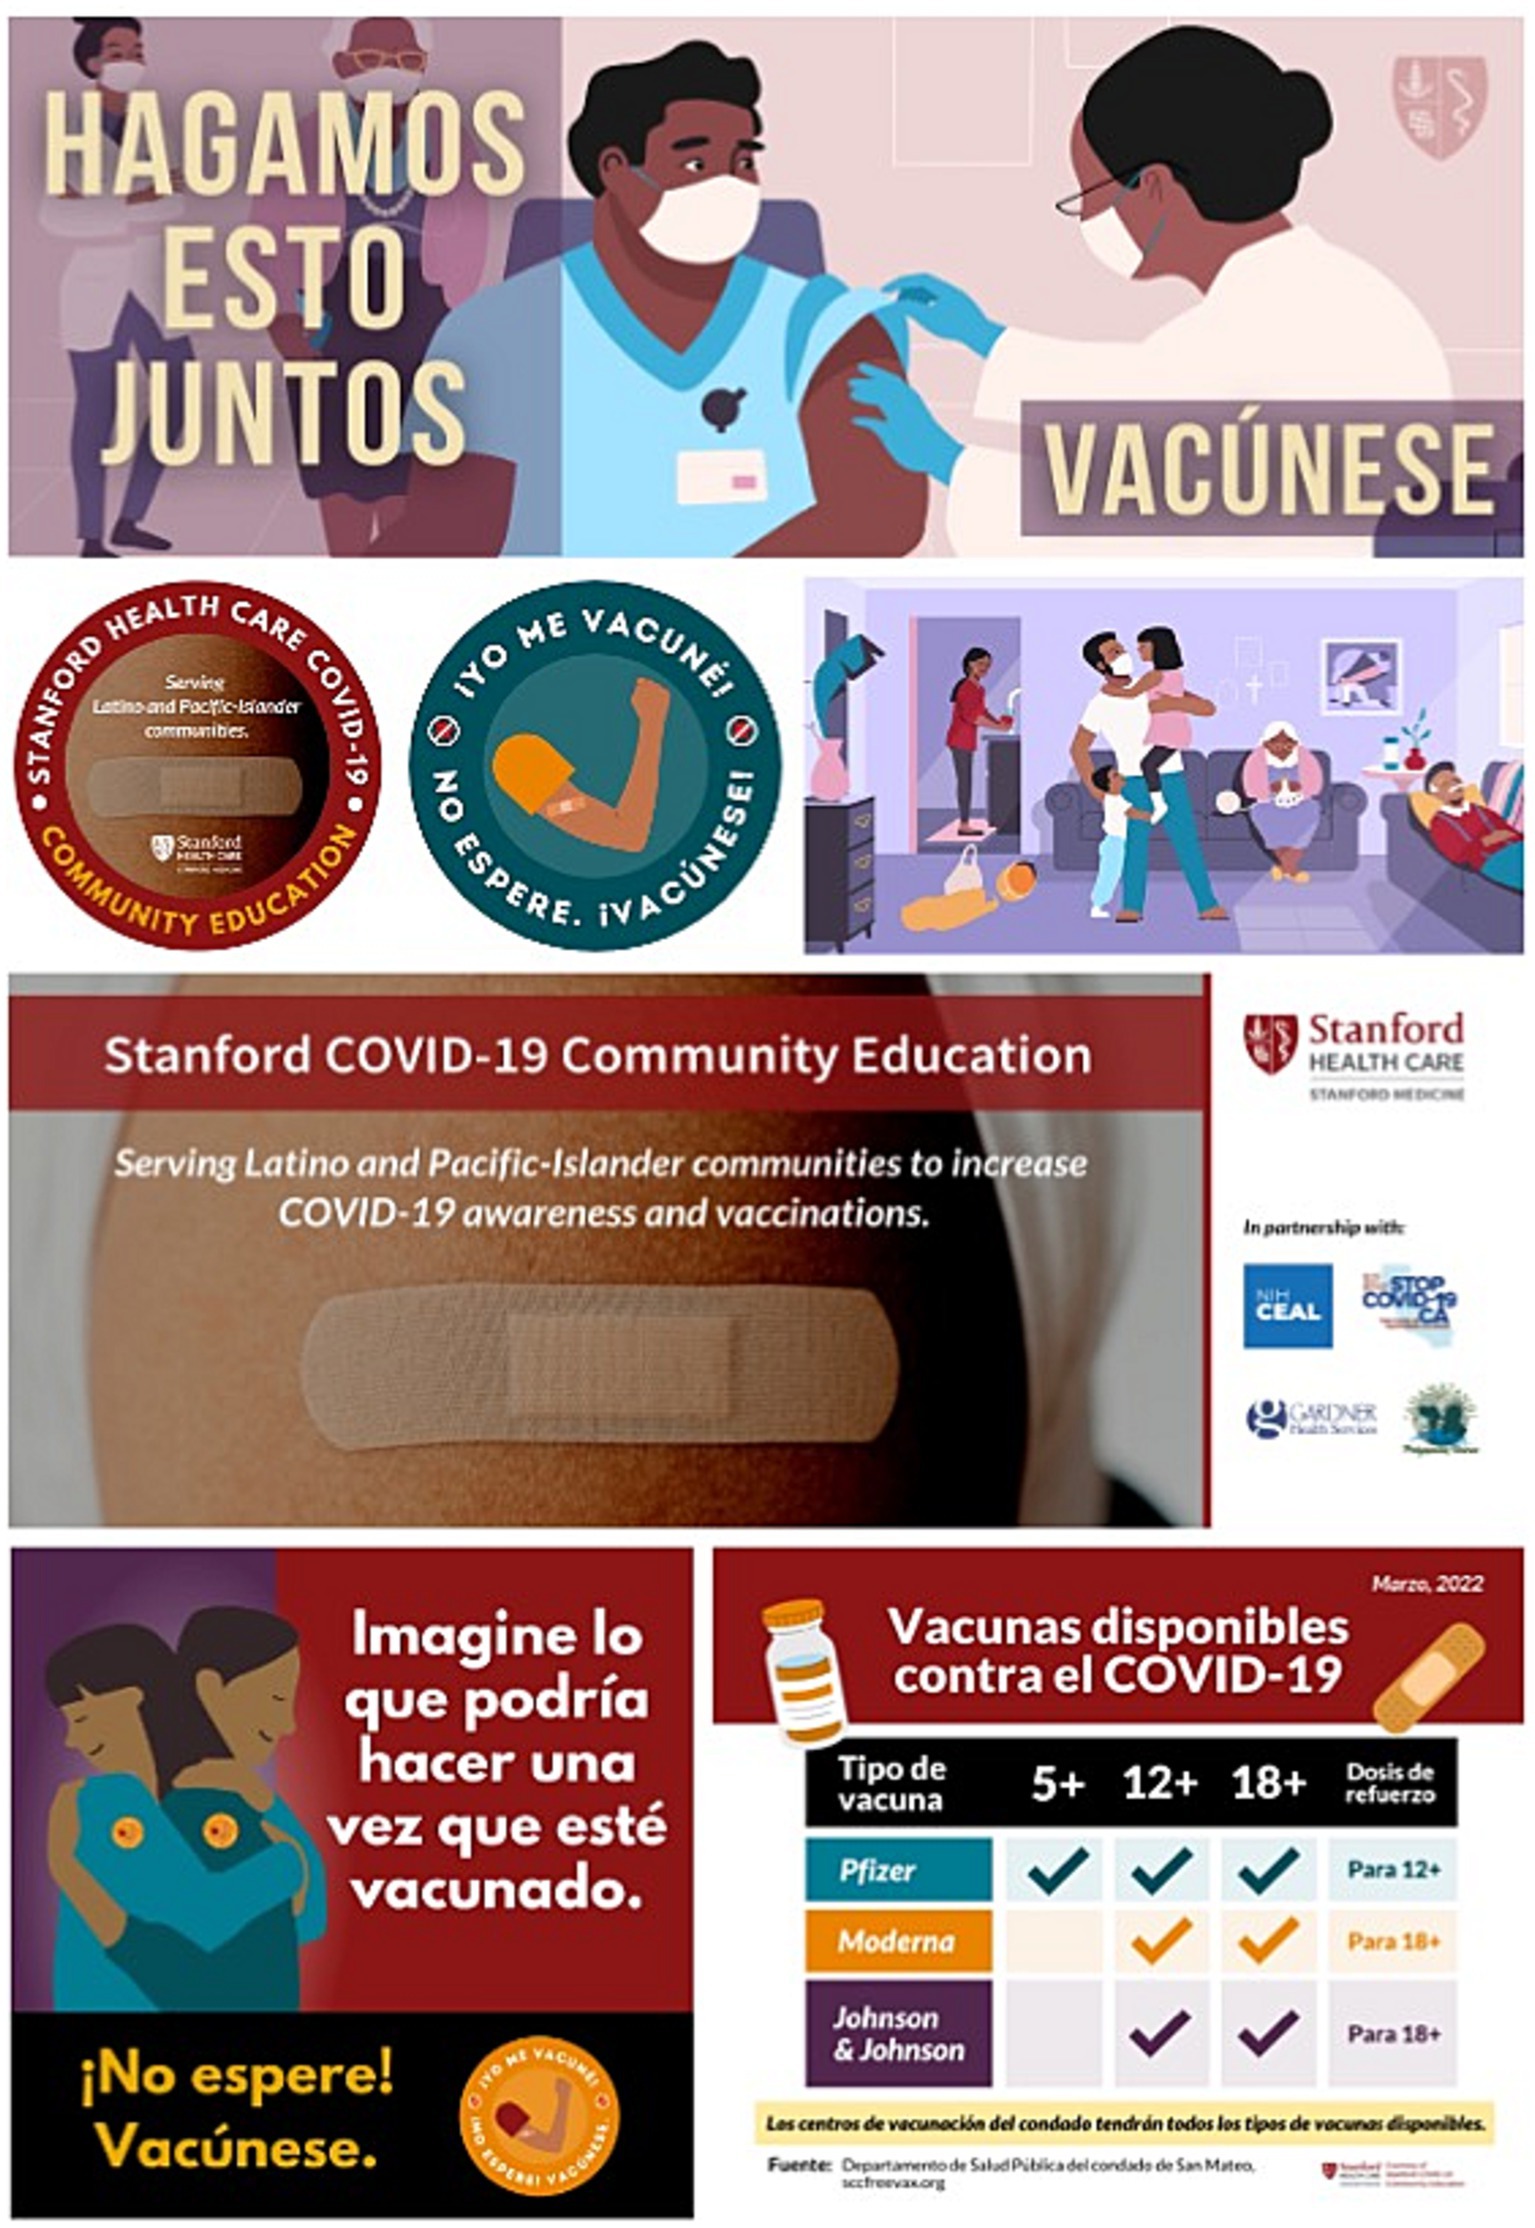 Spanish COVID-19 Informational Webinar Wednesday 11/17 at 7pm via Tzu Chi  Medical Foundation